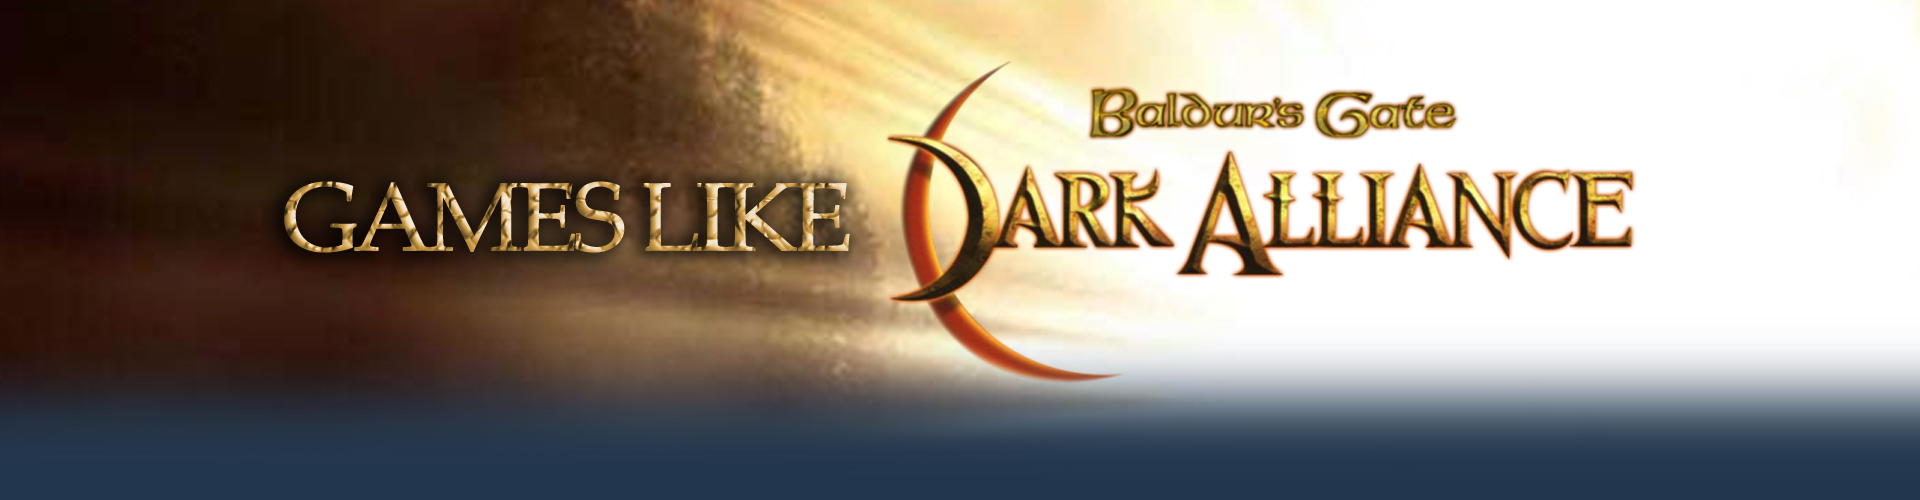 Jeux comme Baldur's Gate Dark Alliance